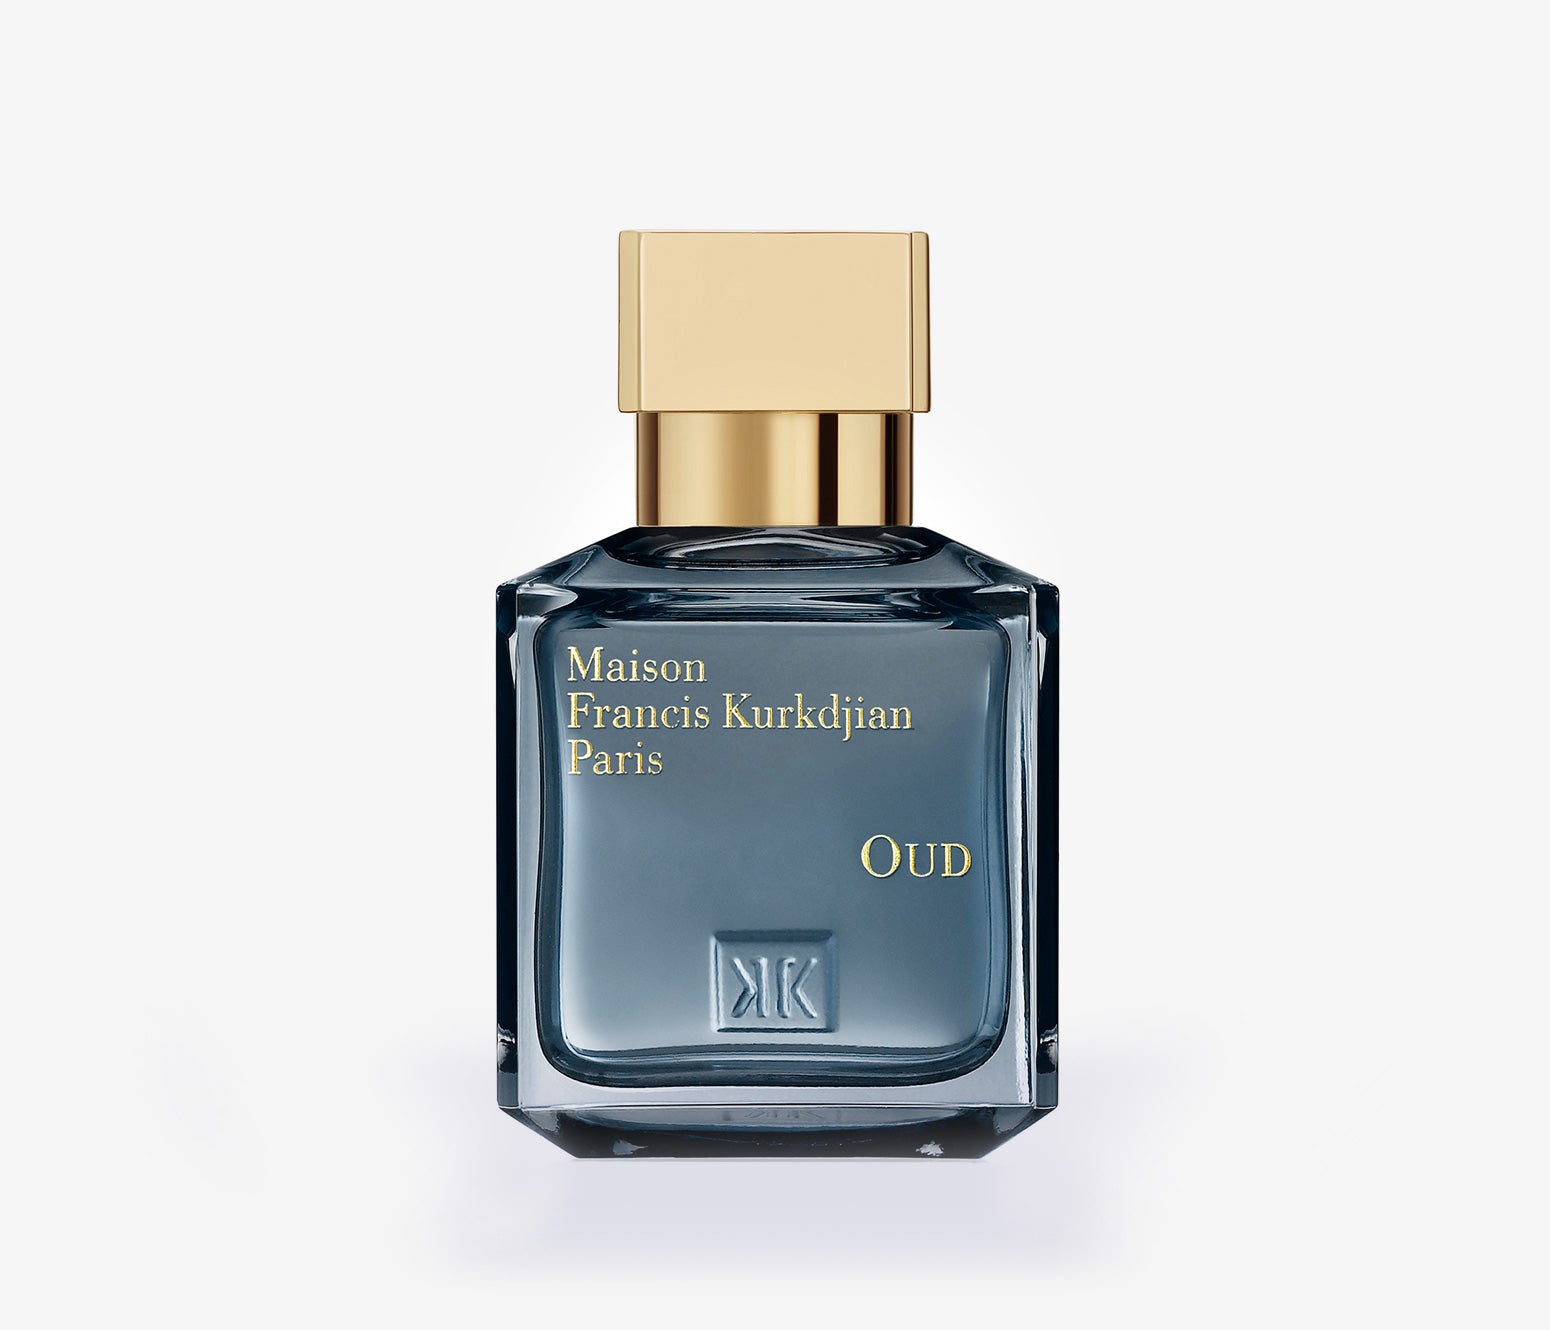 Maison Francis Kurkdjian - Oud - 70ml - EYM8624 - Product Image - Fragrance - Les Senteurs